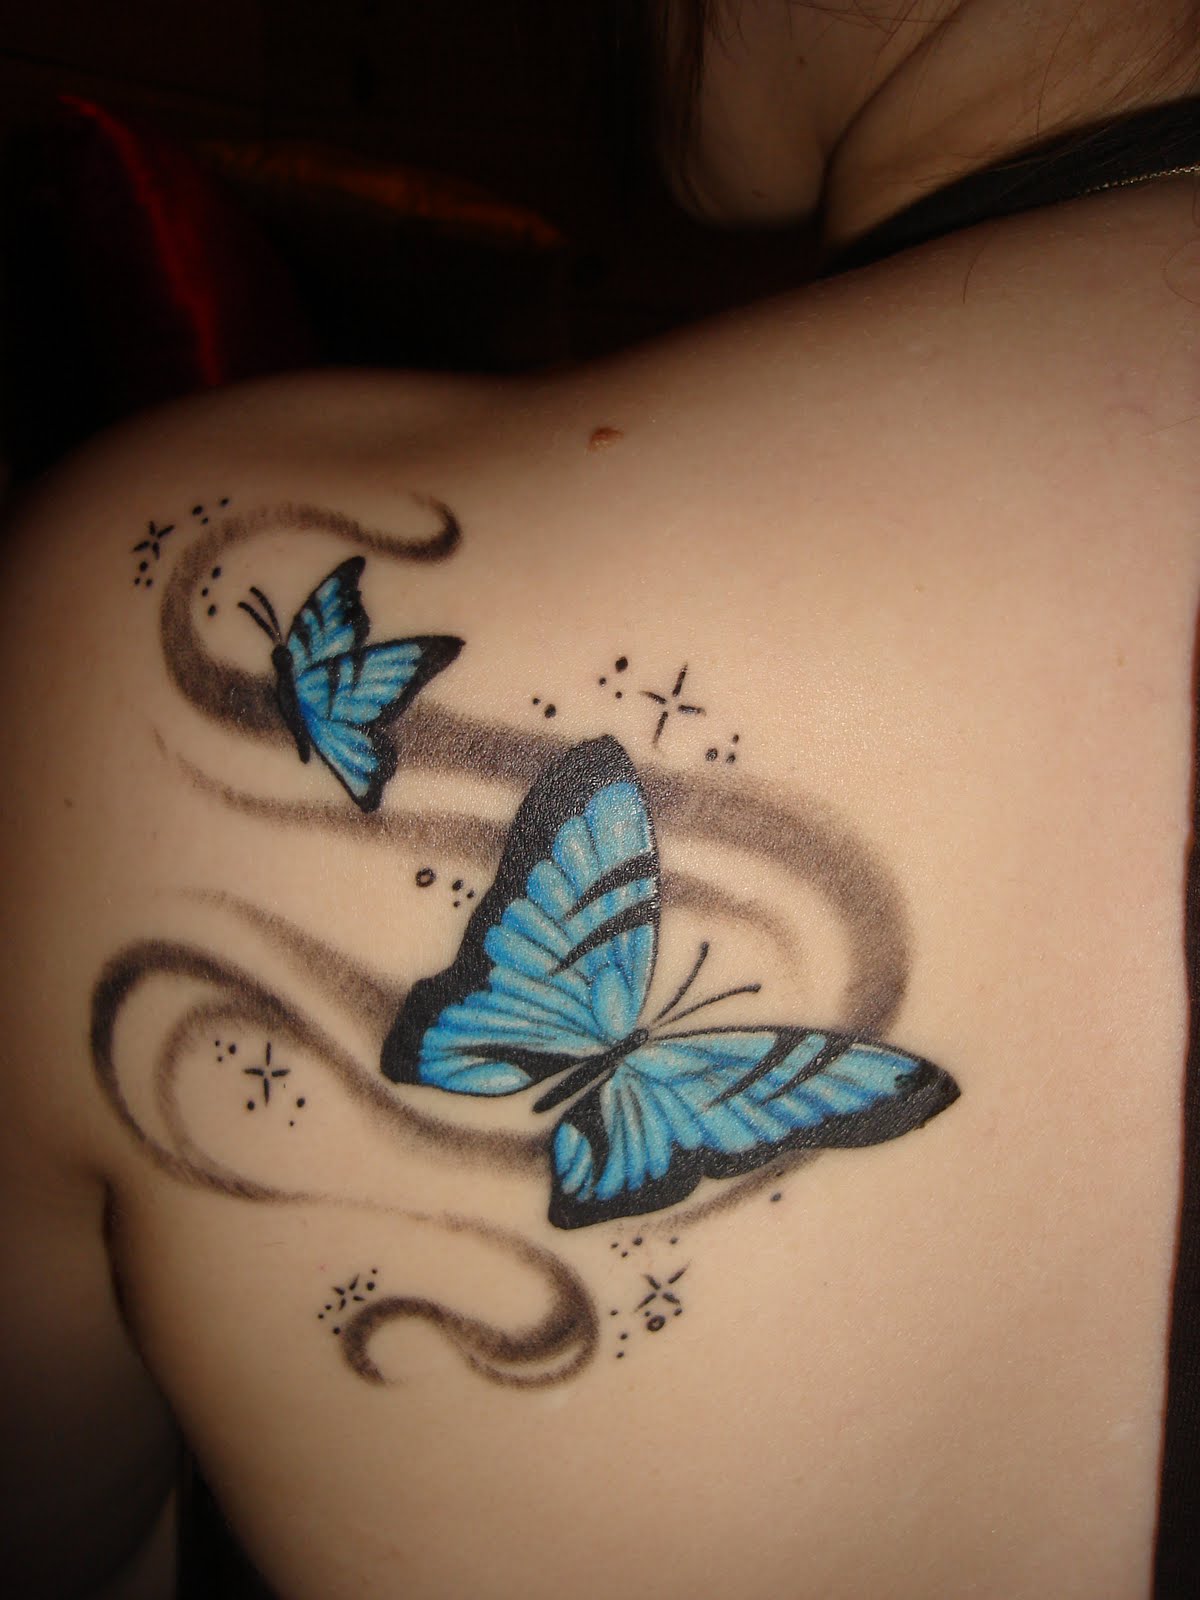 Tribal Tattoos Designs: Tribal Butterfly Tattoos - Tribal+Butterfly+Tattoos+3